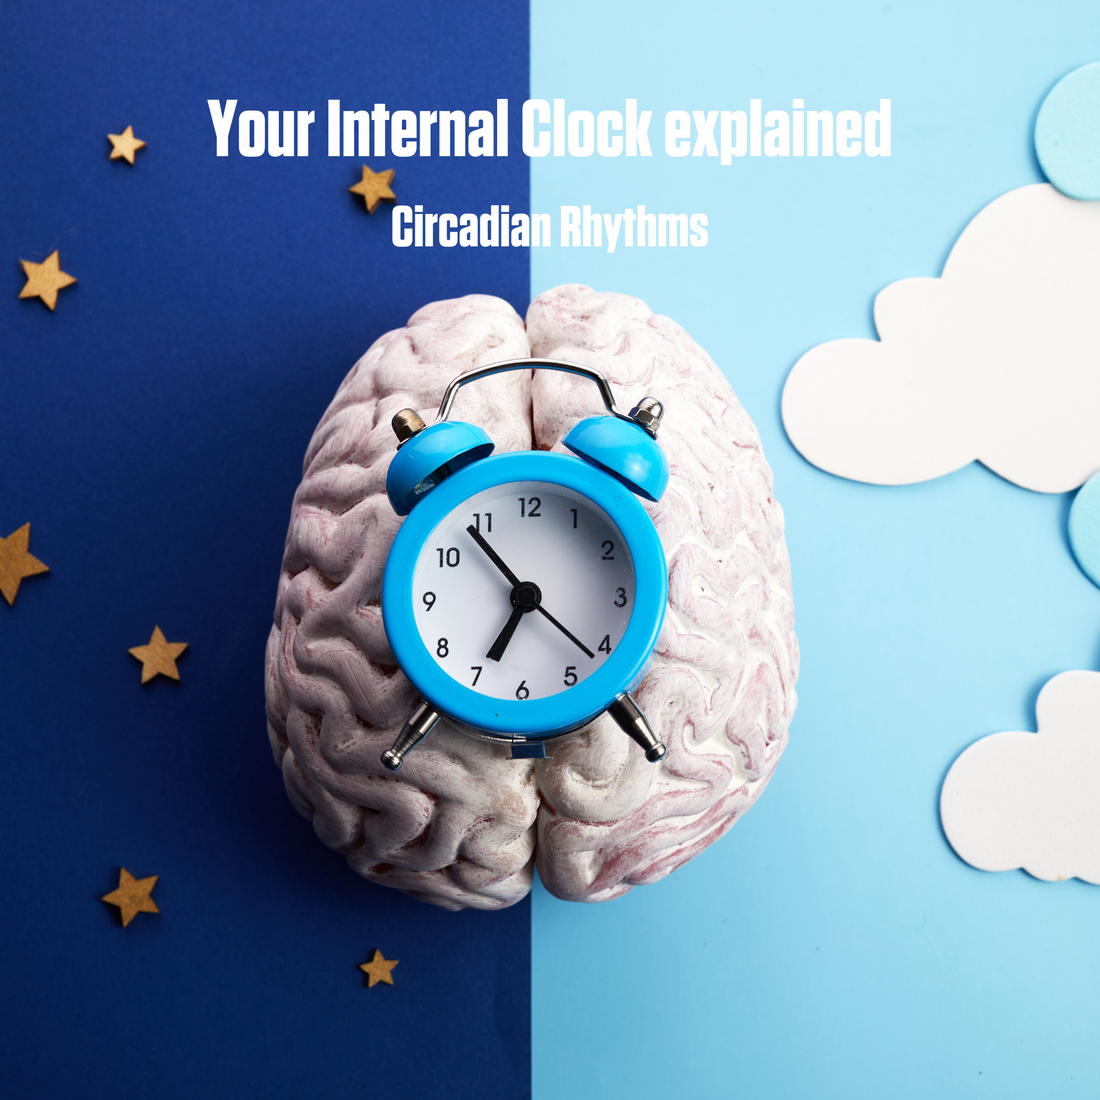 Your internal clock clock explained (circadian rhythm)